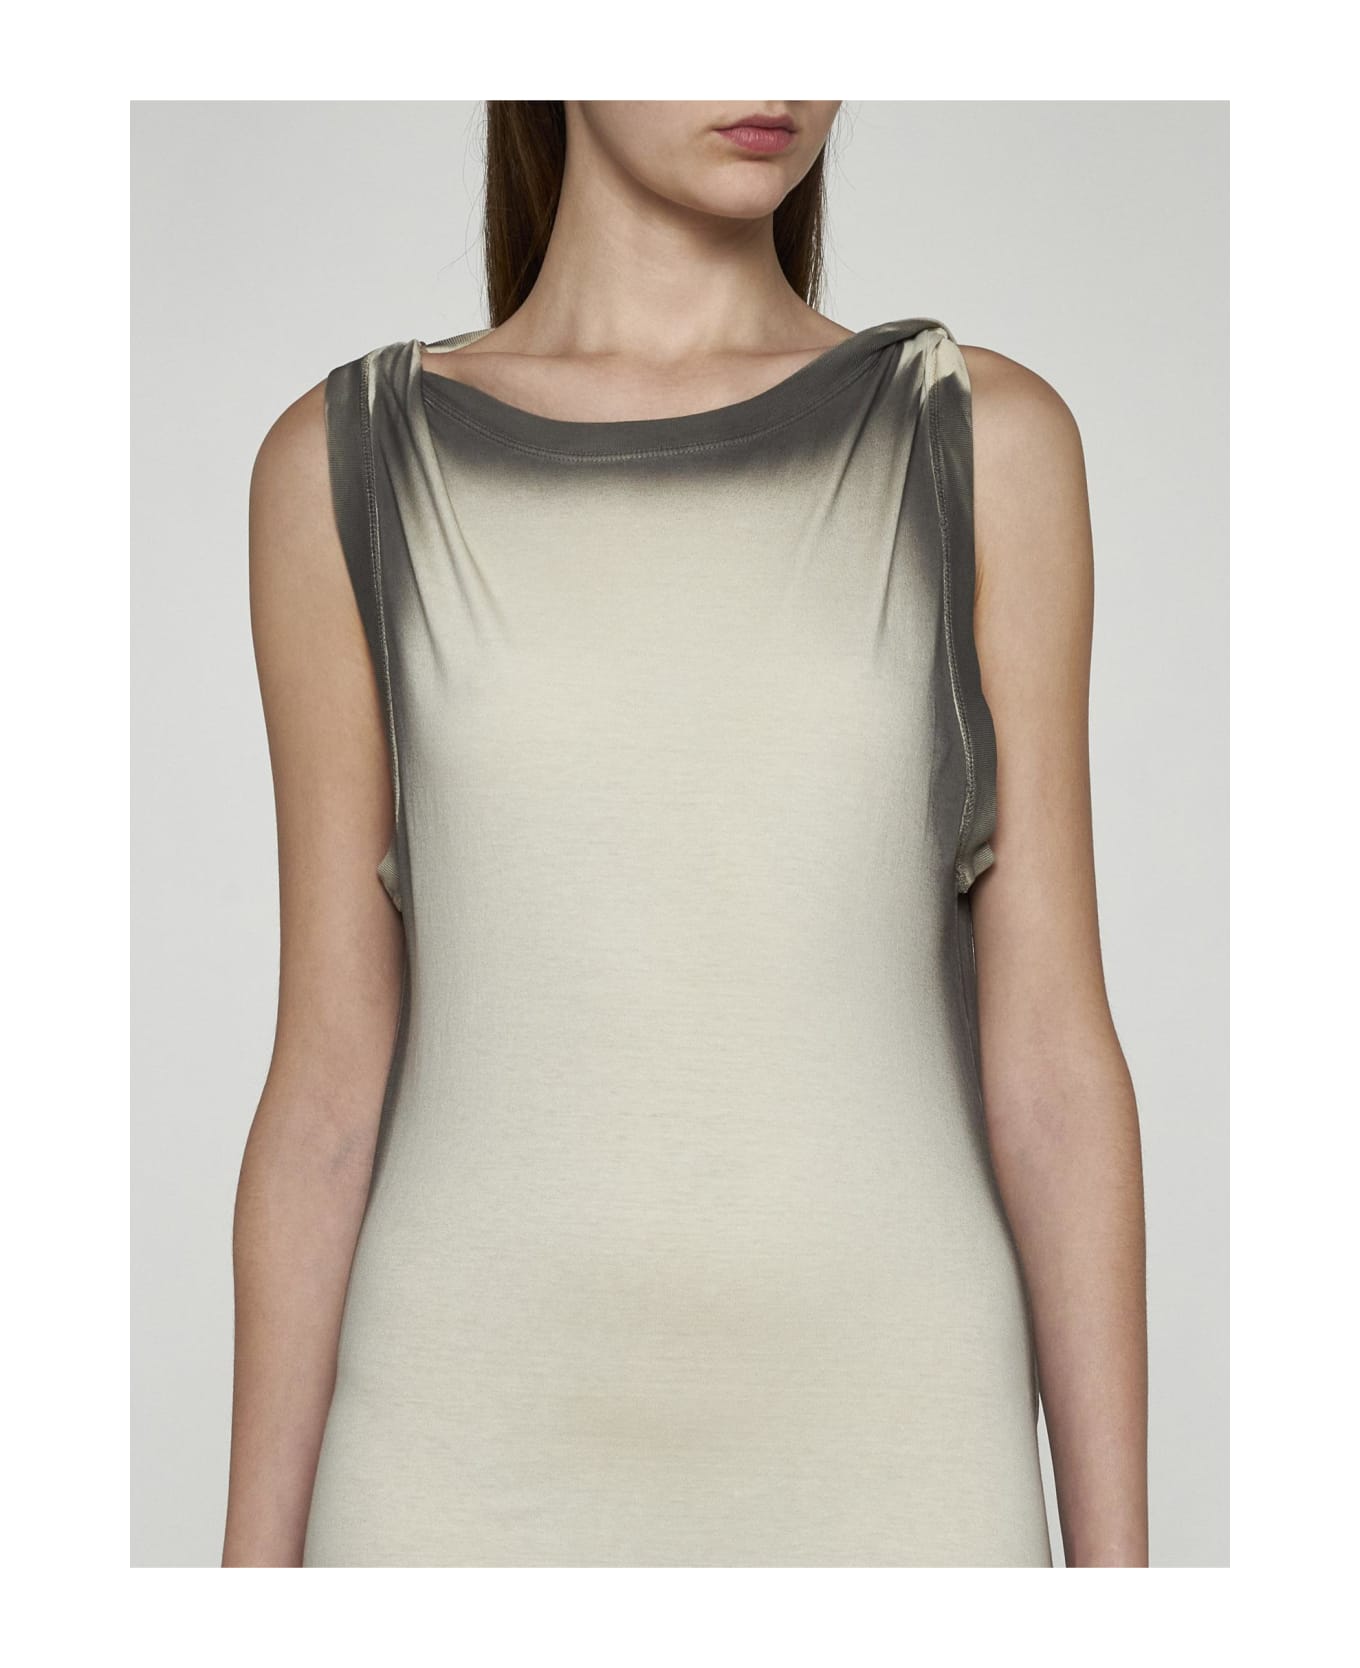 Y/Project Twisted Shoulder Cotton Long Dress - Beige